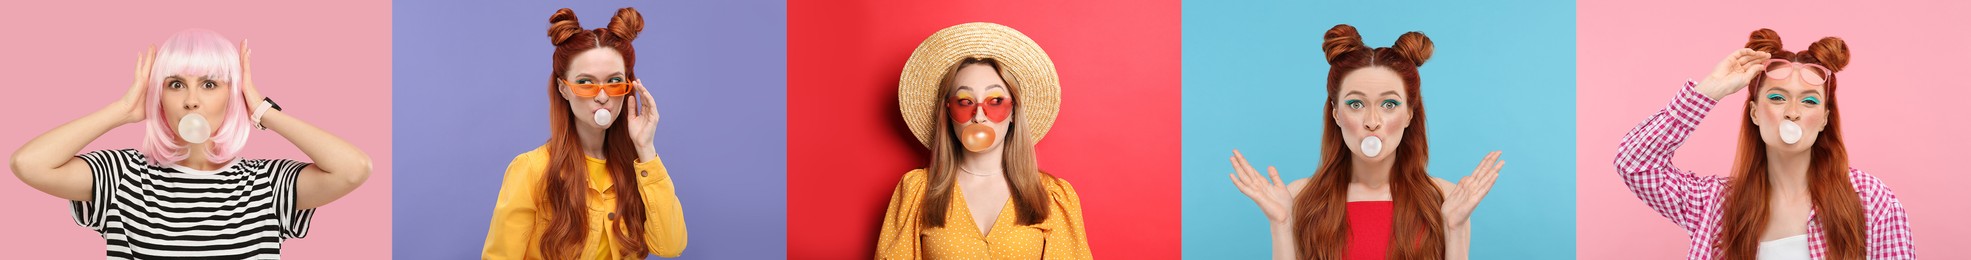 Women blowing bubble gums on color backgrounds, set of photos